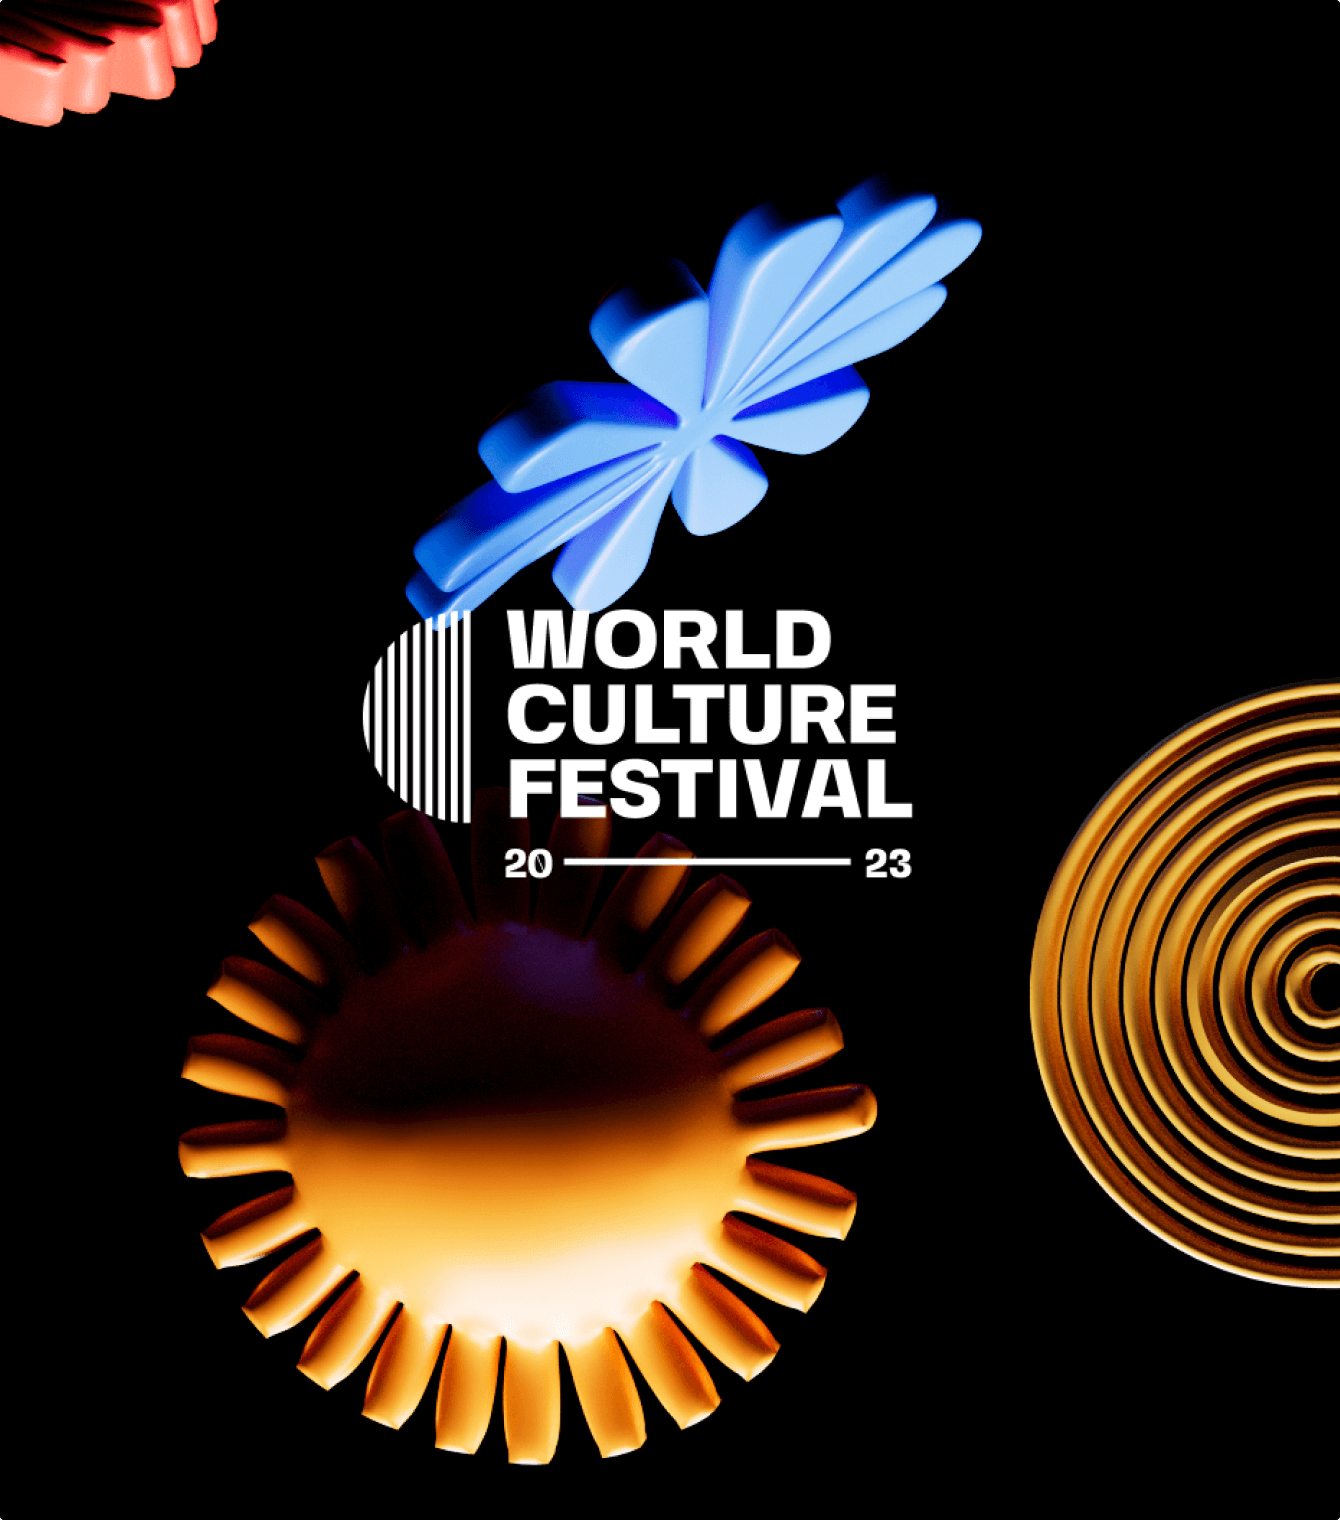 World culture festival - branding for the event.